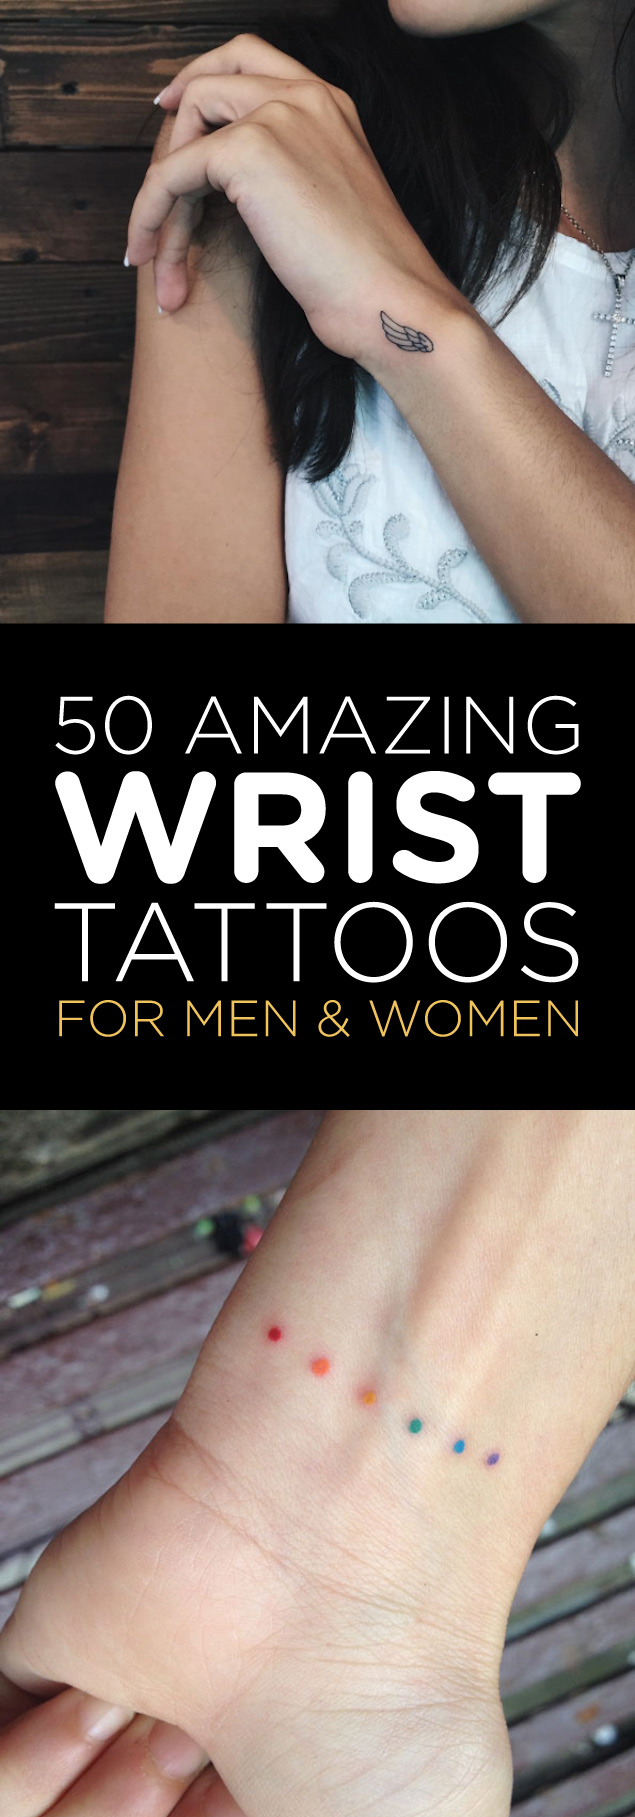 50 Amazing Wrist Tattoos For Men & Women - TattooBlend